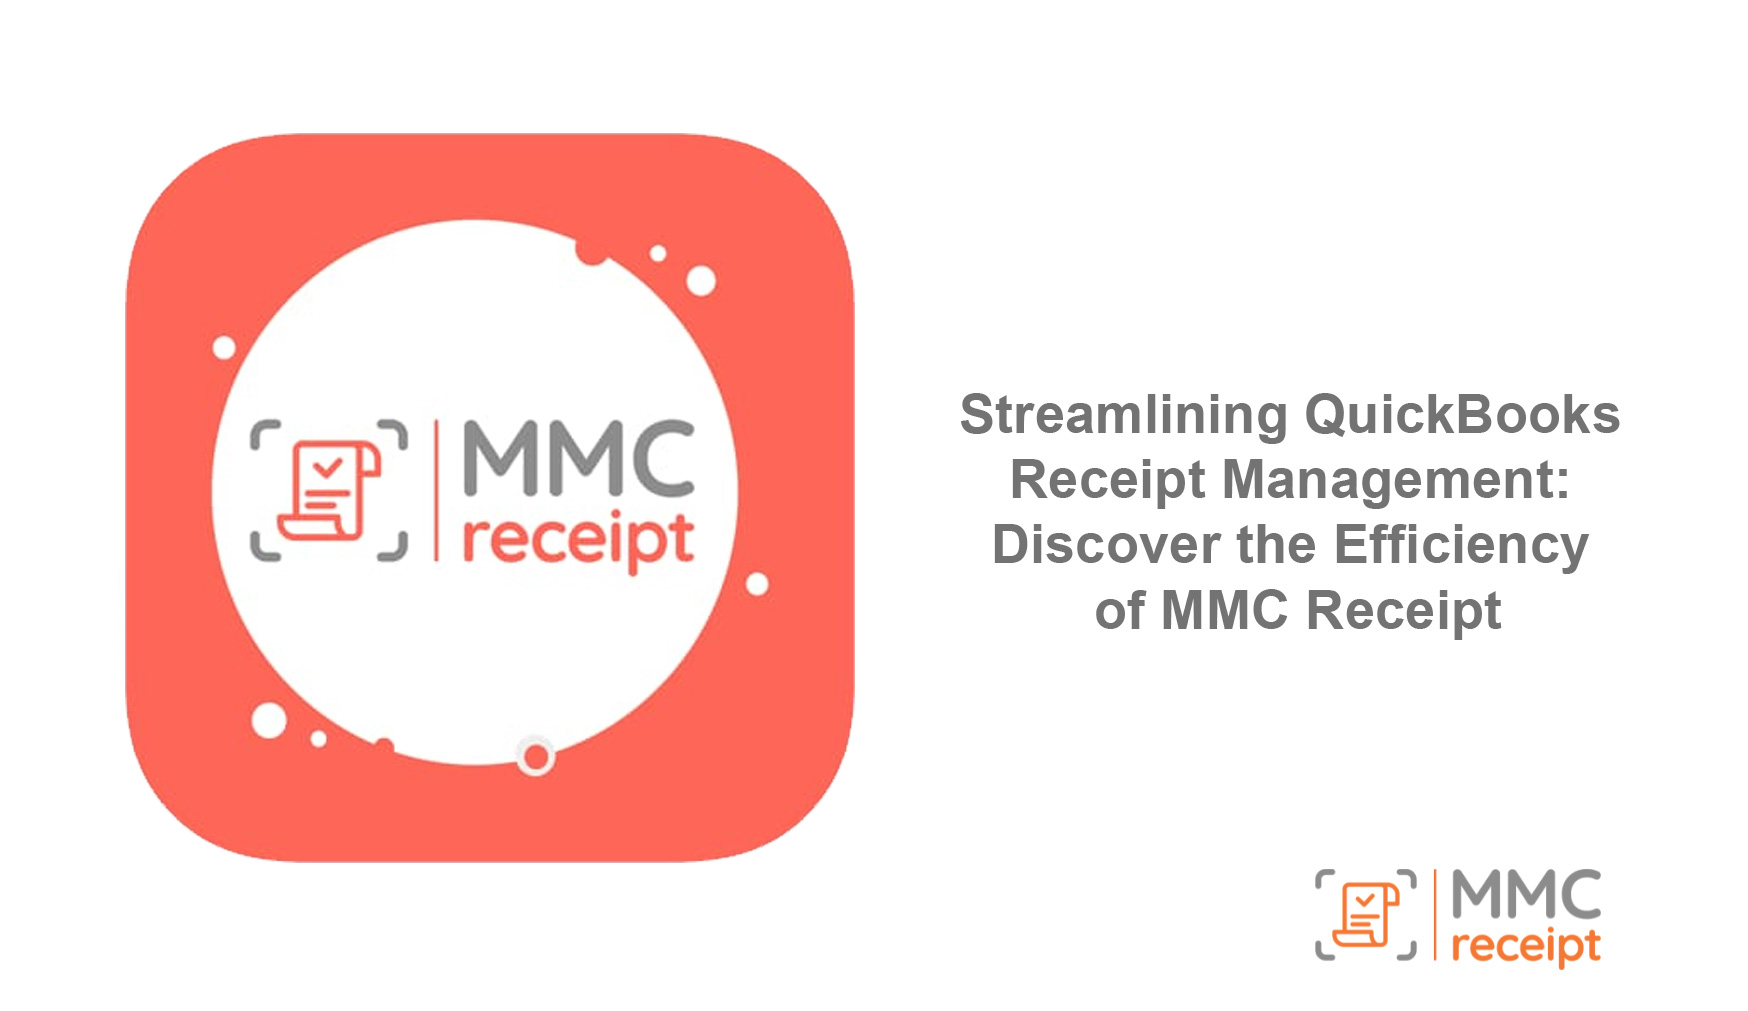 Streamlining QuickBooks Receipt Management: Discover the Efficiency of MMC Receipt